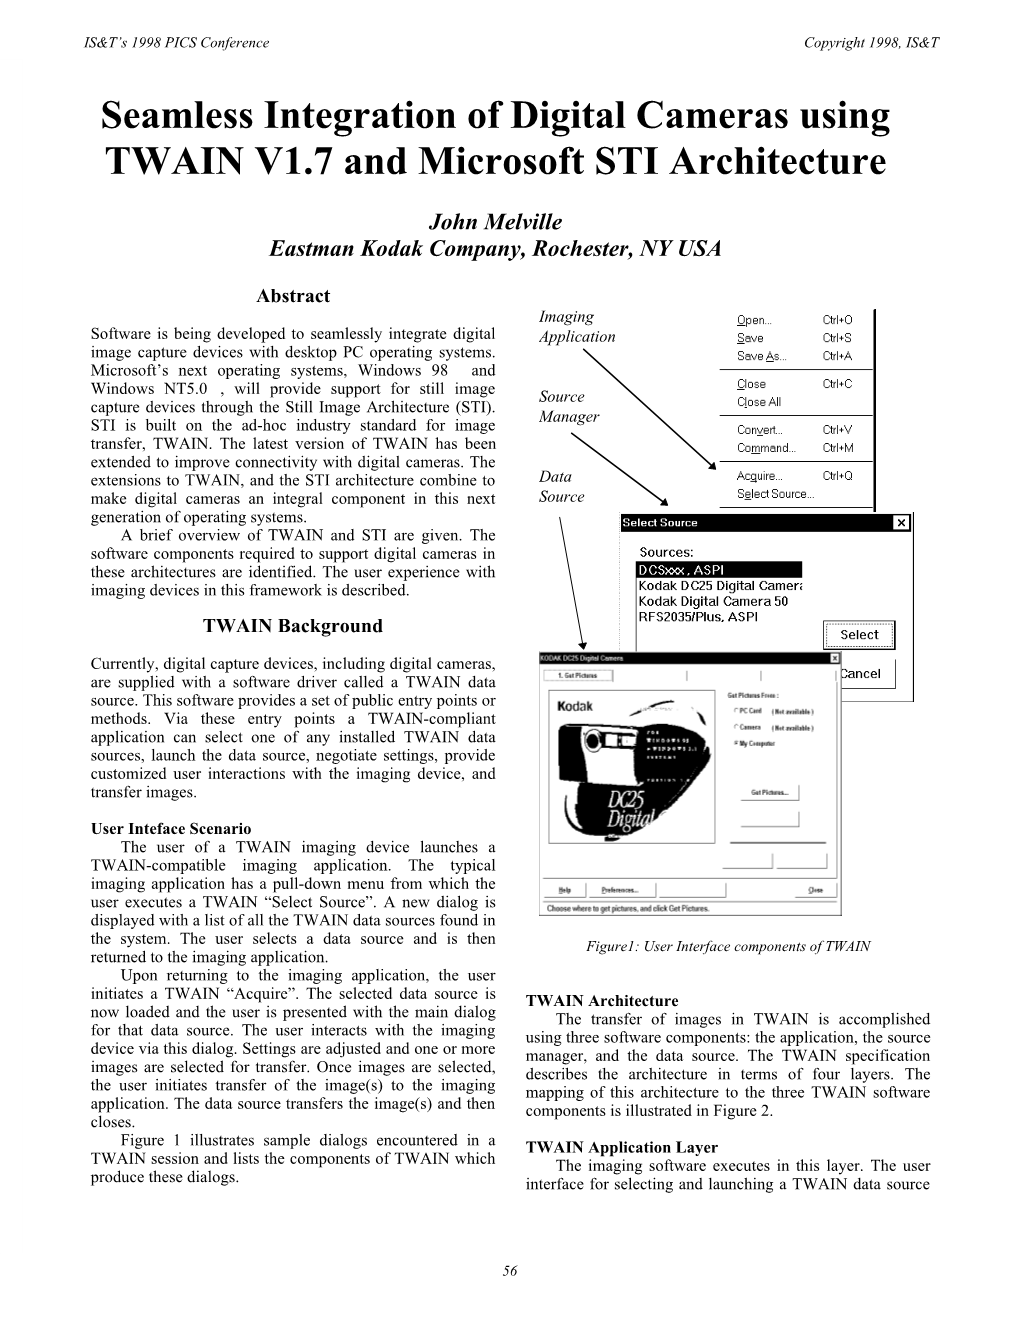 Seamless Integration of Digital Cameras Using TWAIN V1.7 and Microsoft STI Architecture